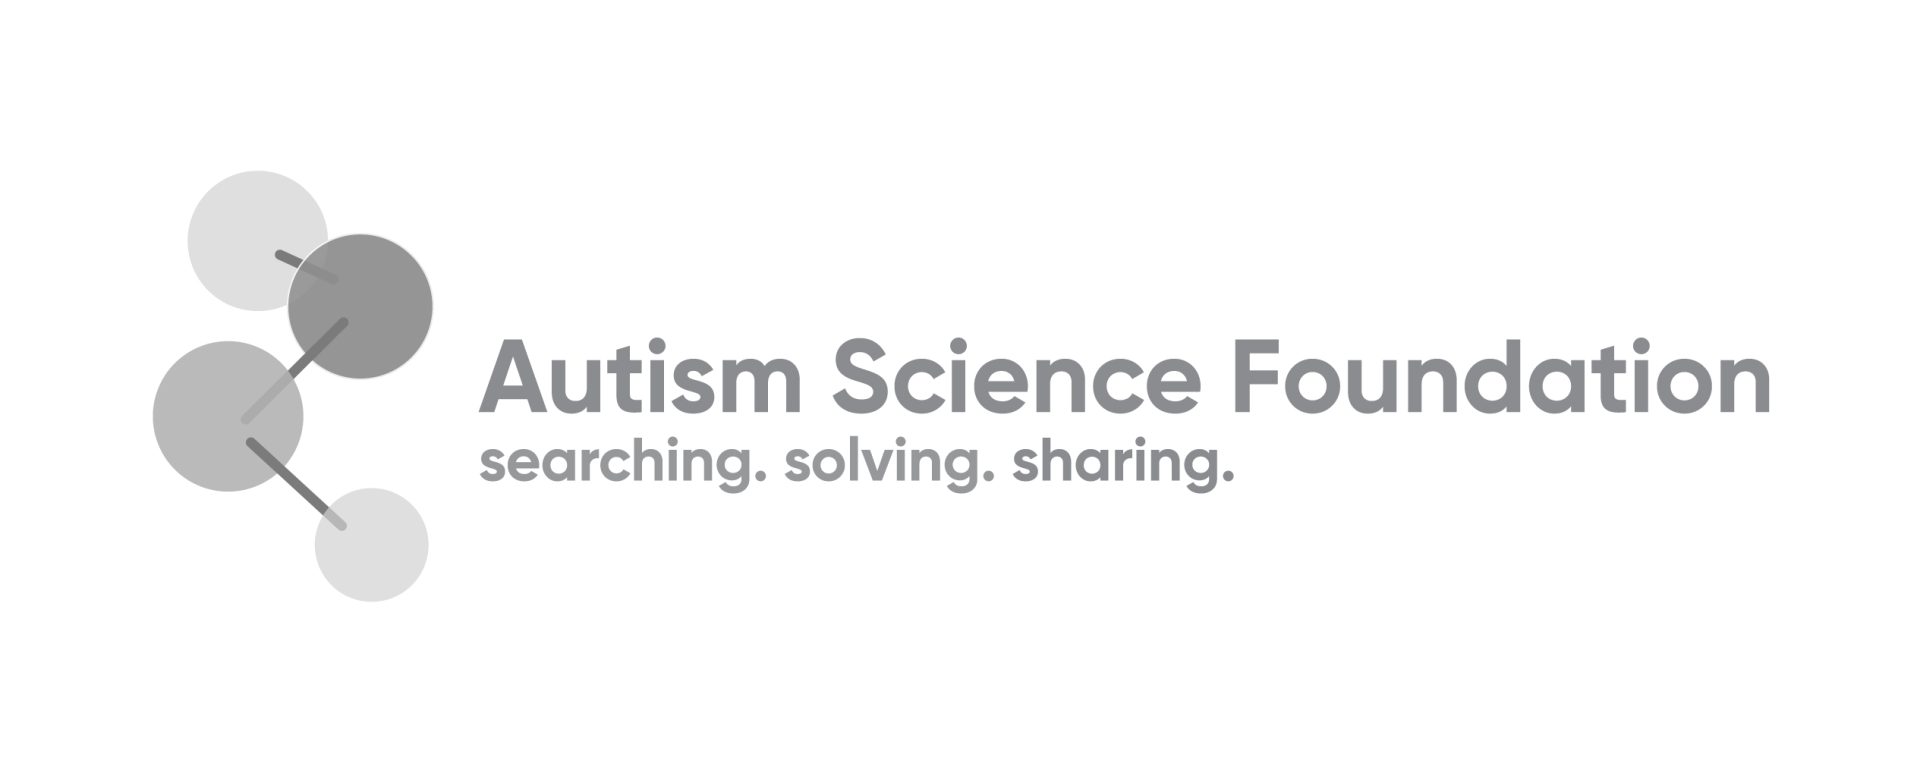 interior Former Autism Society Of America President Scott Badesch,  To Receive The Autism Science Foundation’s  2020 Caryn Schwartzman Spirit Award banner image